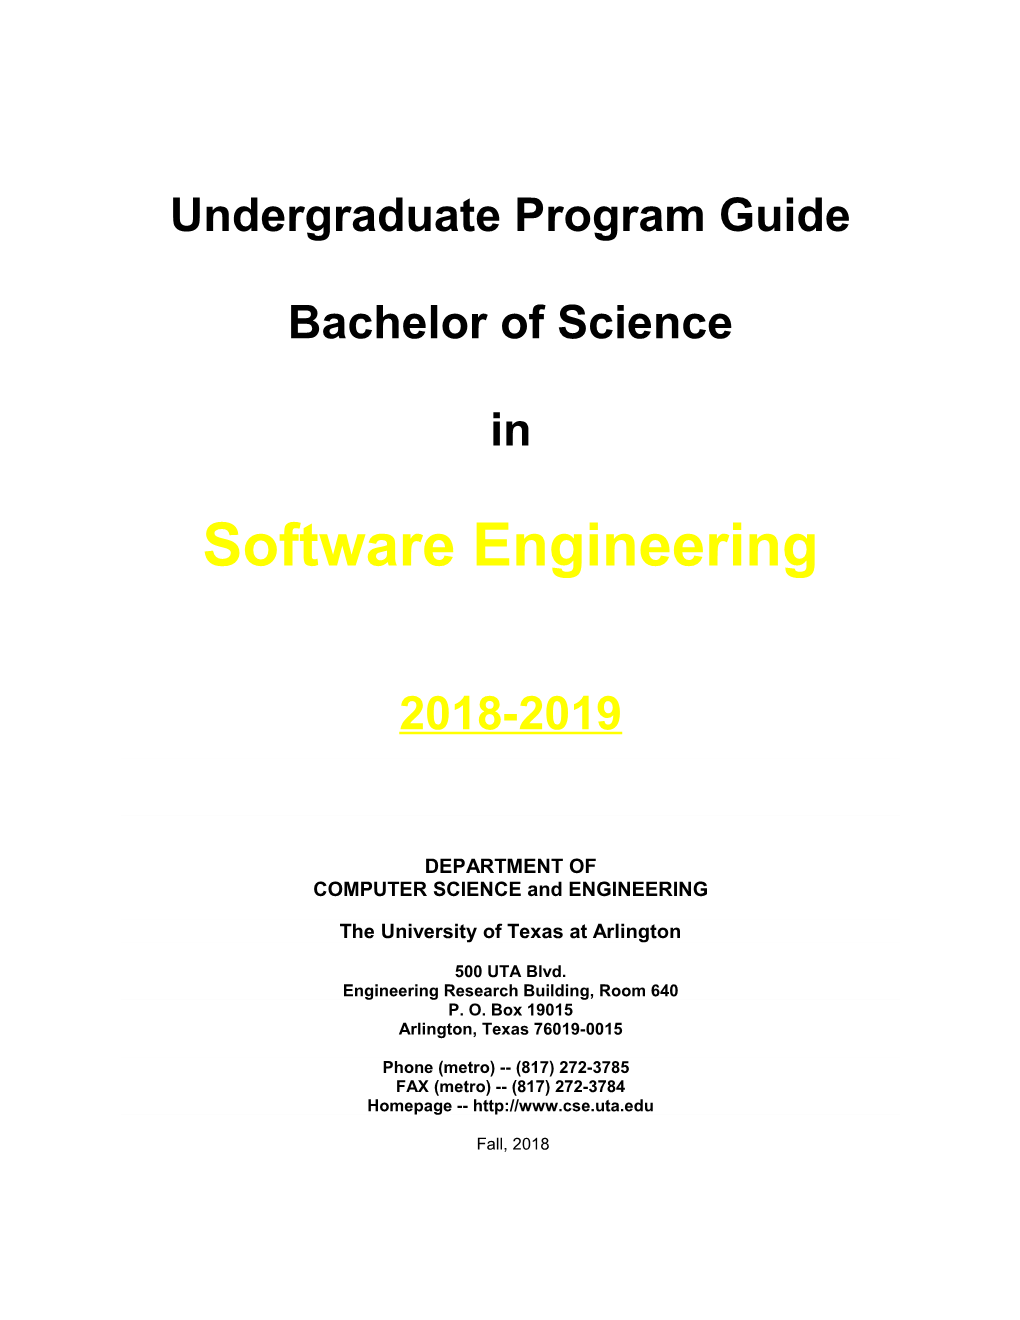 BSSE Undergraduate Program Guide 2001-2003